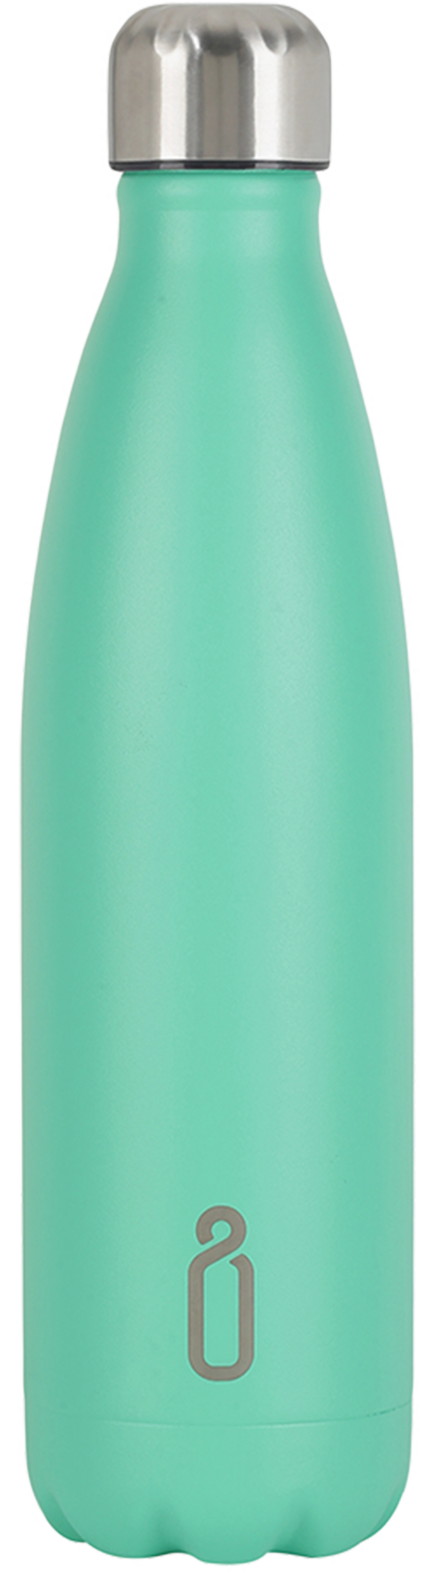 Matte Apple Reusable Water Bottle 750ml